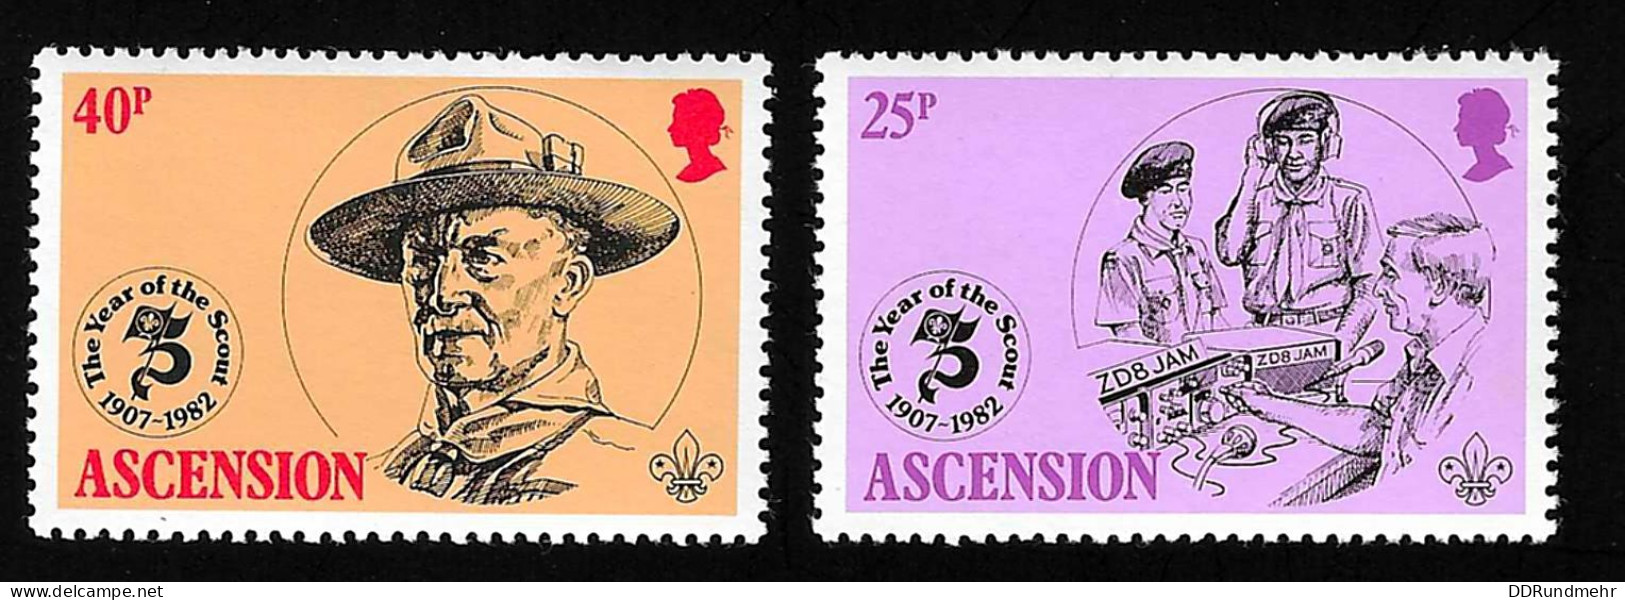 1982 Scouting  Michel AC 308 - 309 Stamp Number AC 303 - 304 Yvert Et Tellier AC 305 - 306 Xx MNH - Ascension (Ile De L')